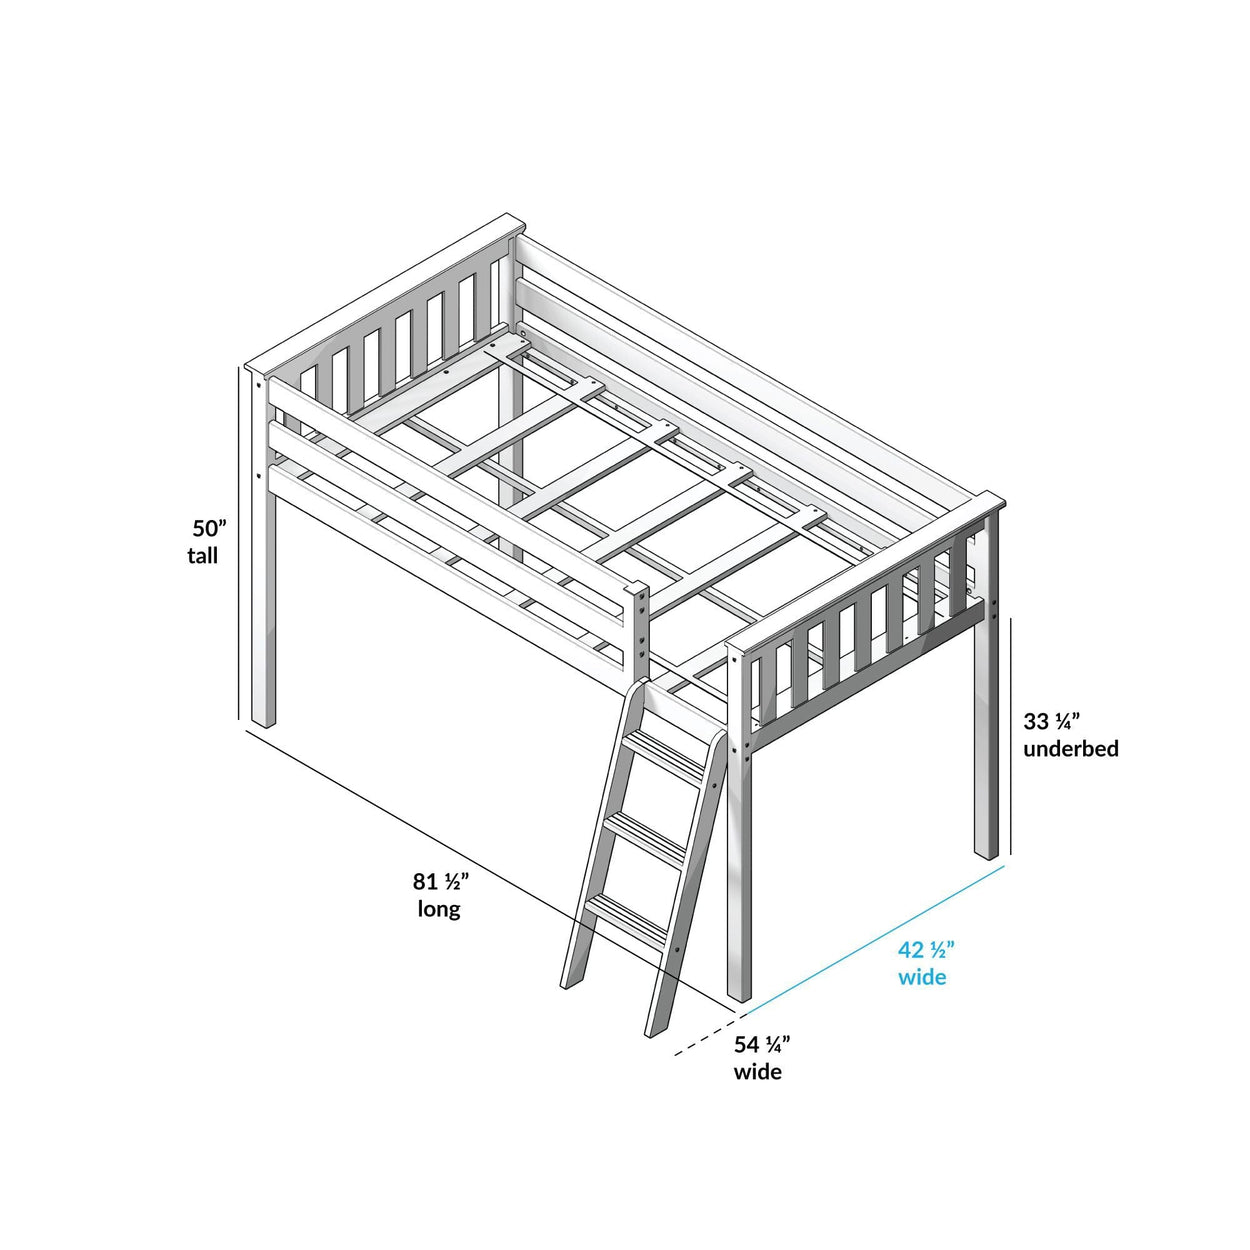 180212-002 : Loft Beds Twin-Size Low Loft, White